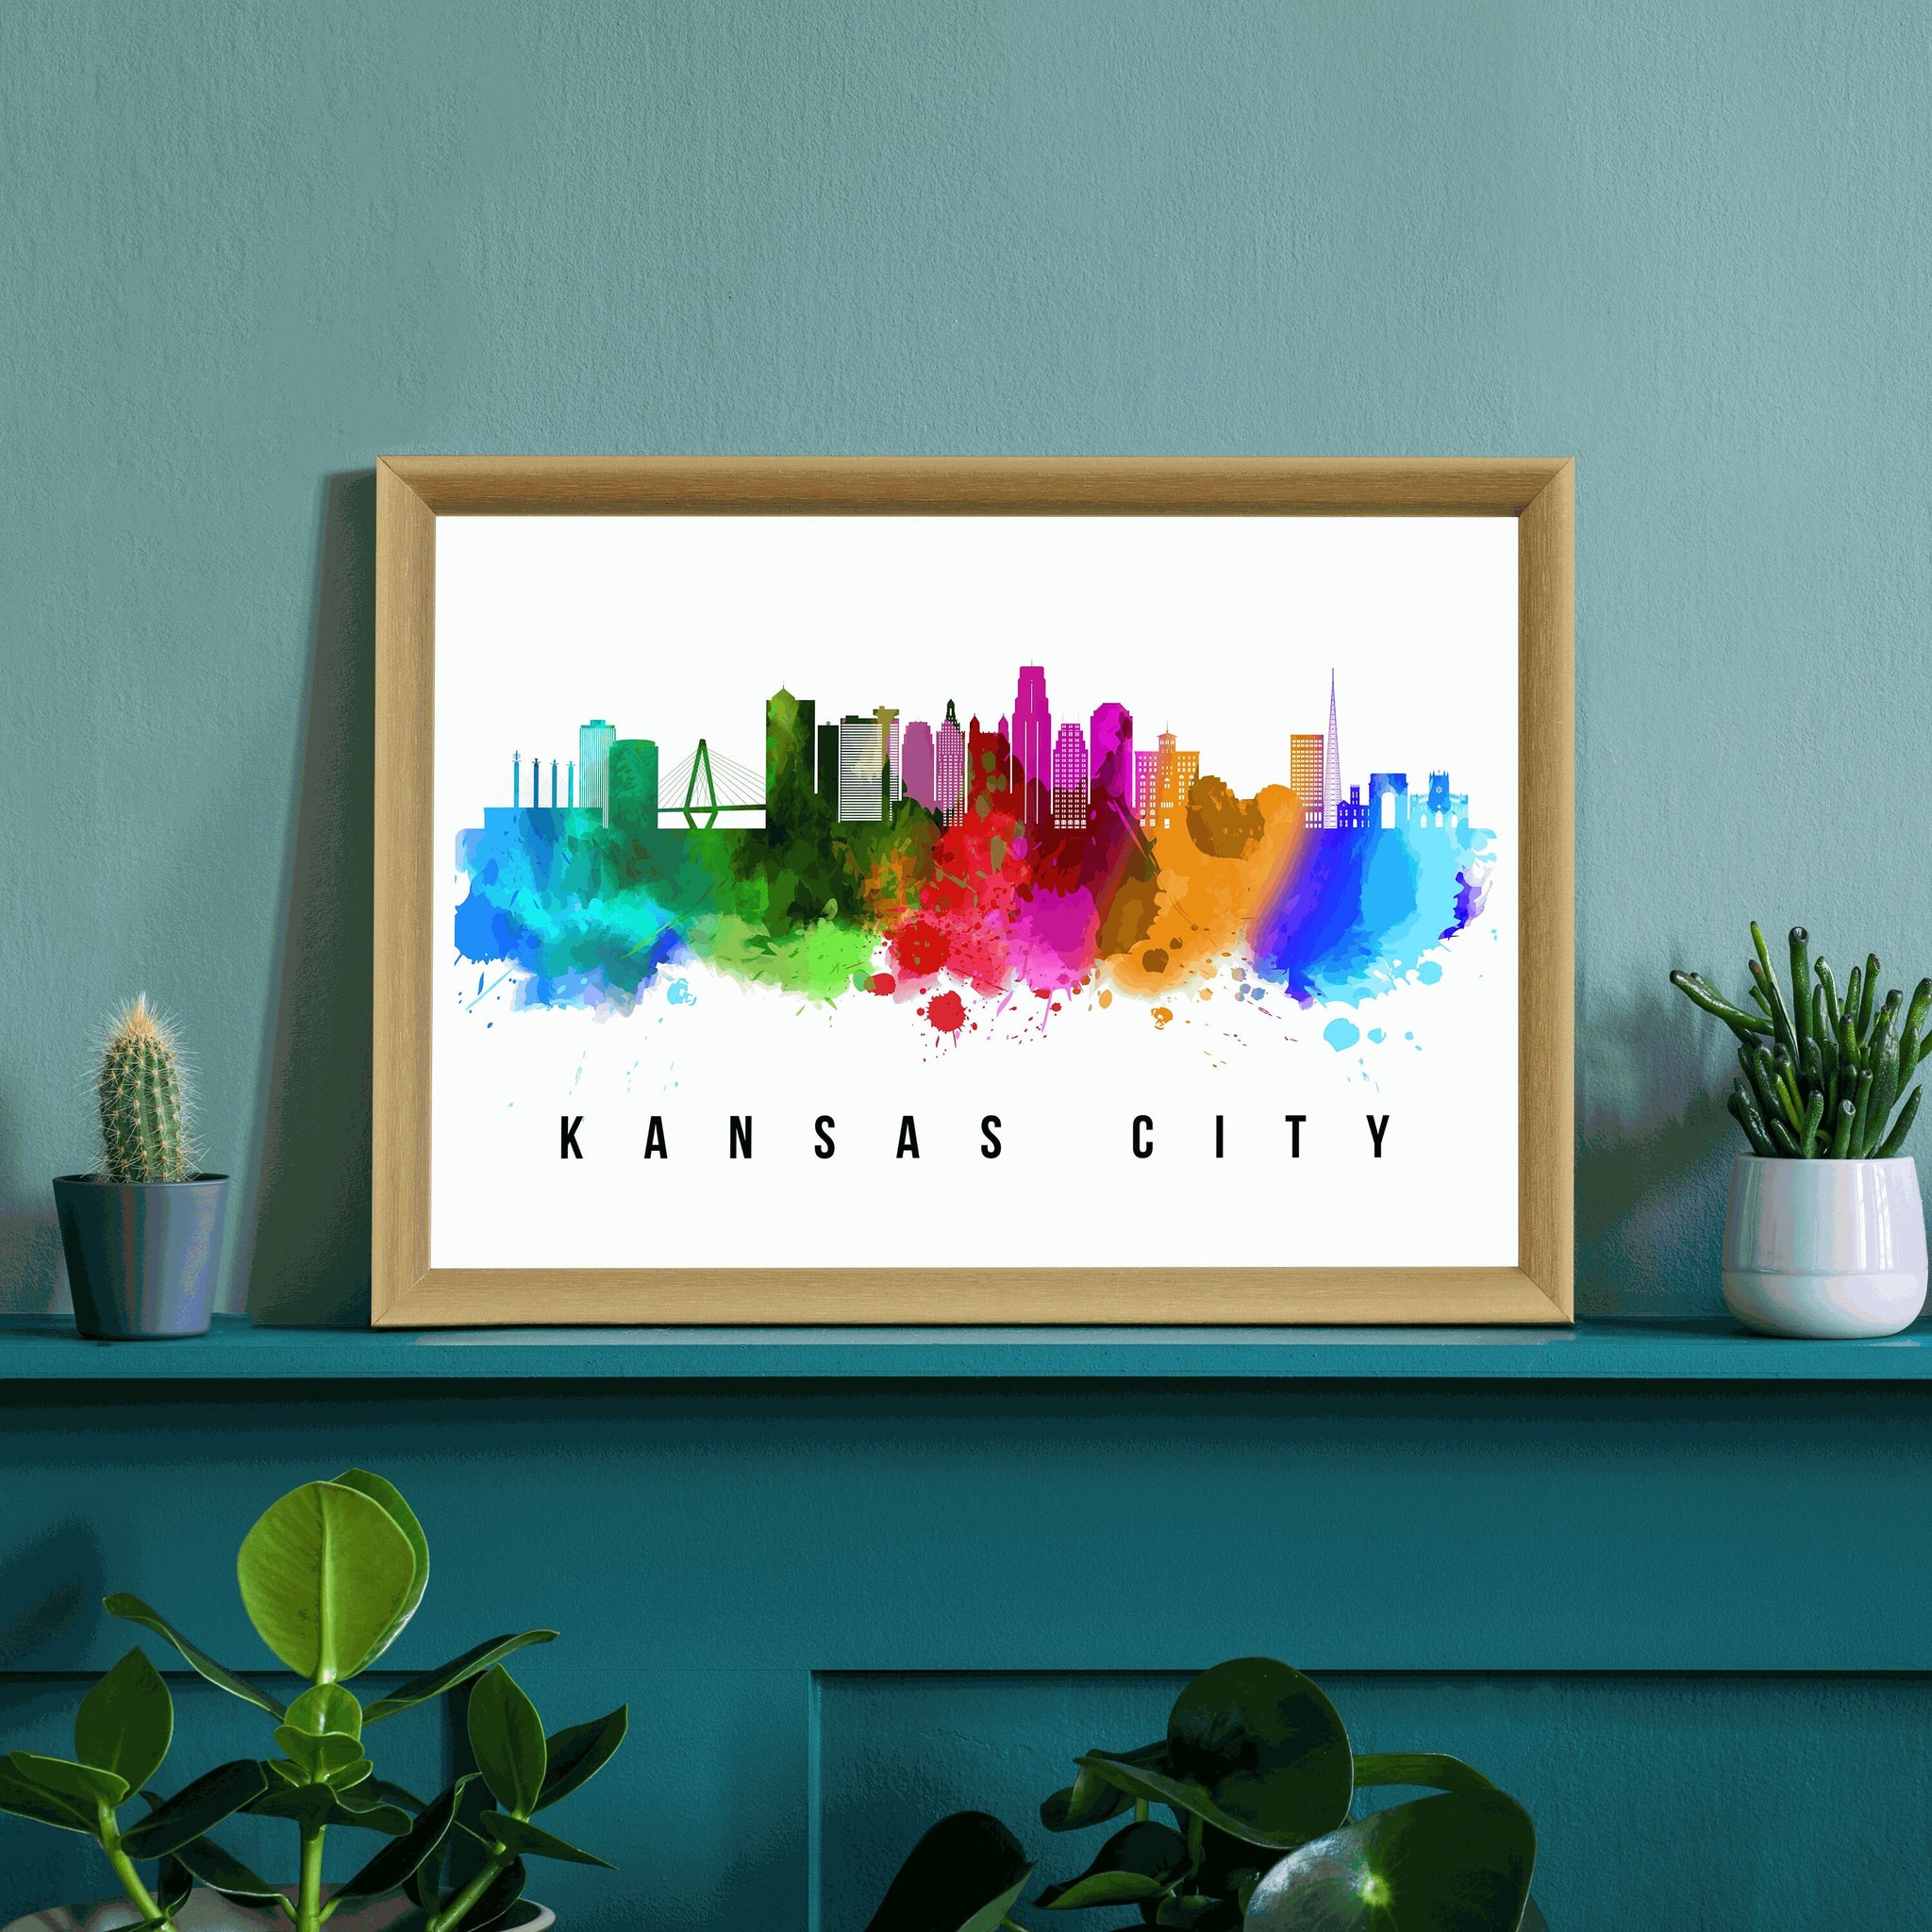 Kansas City - Missouri Skyline Poster, Cityscape Painting, Kansas City - Missouri Landmark and Cityscape Print, Home and Office Wall Art